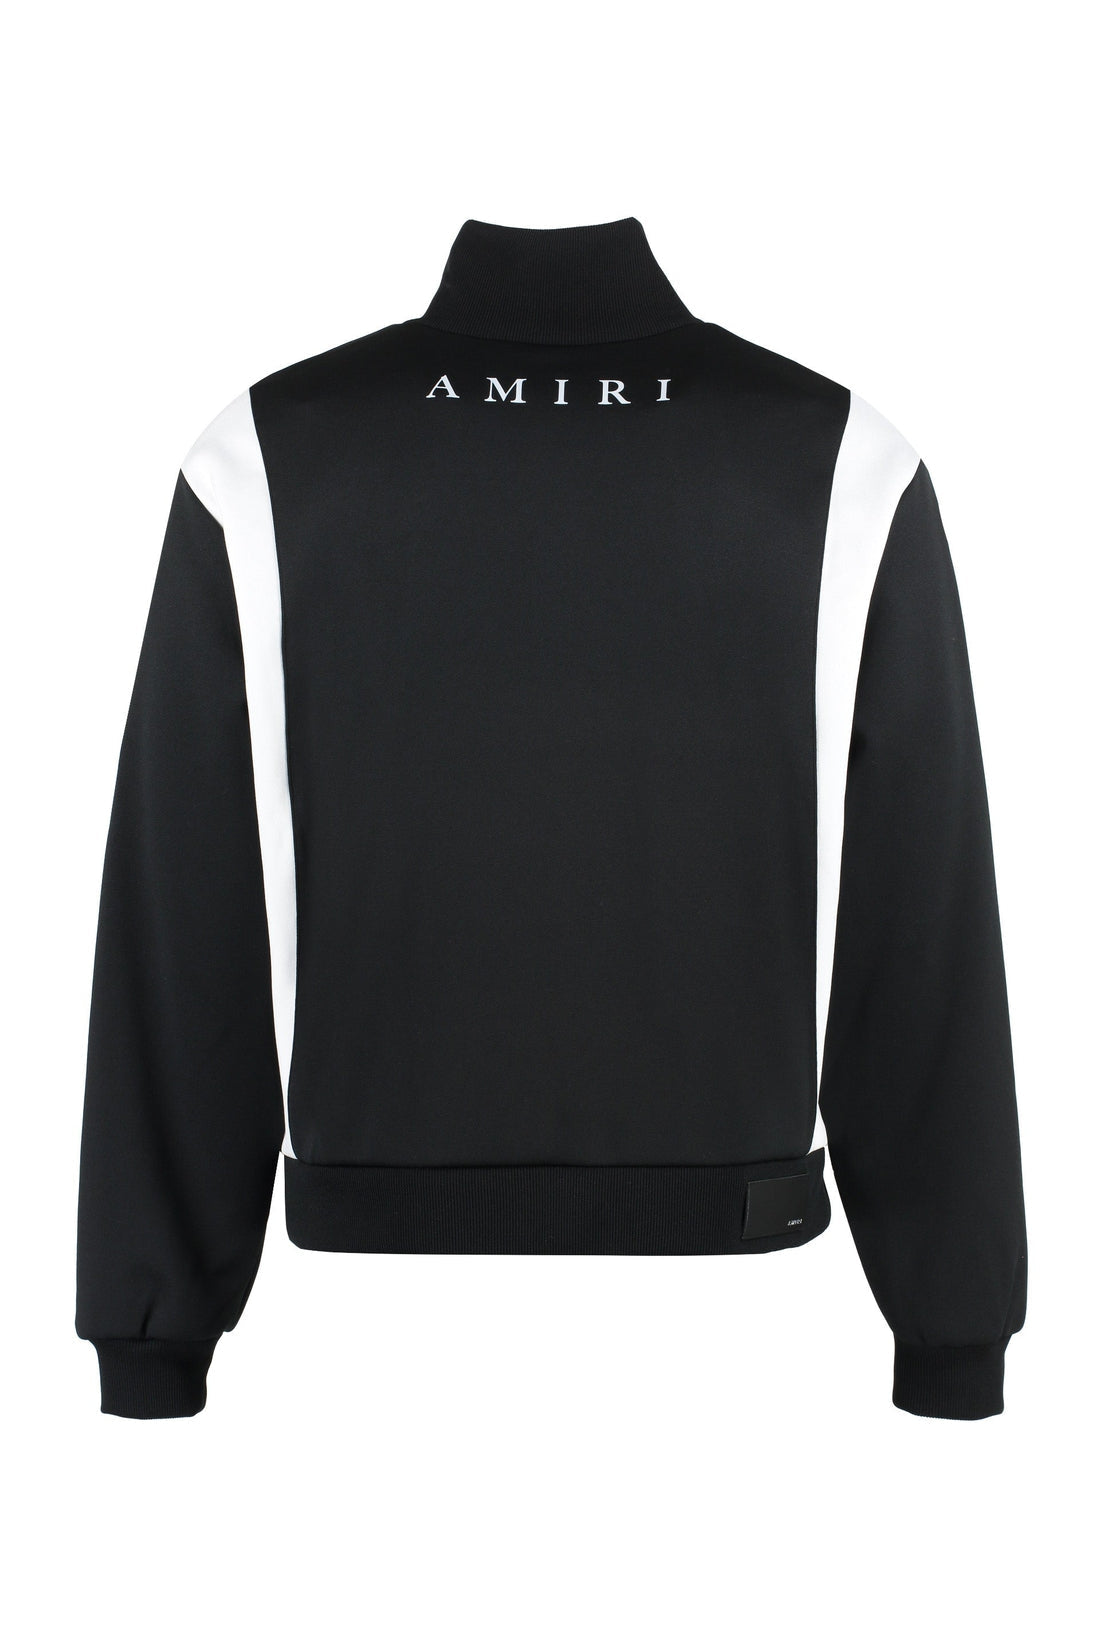 AMIRI-OUTLET-SALE-Techno fabric full-zip sweatshirt-ARCHIVIST